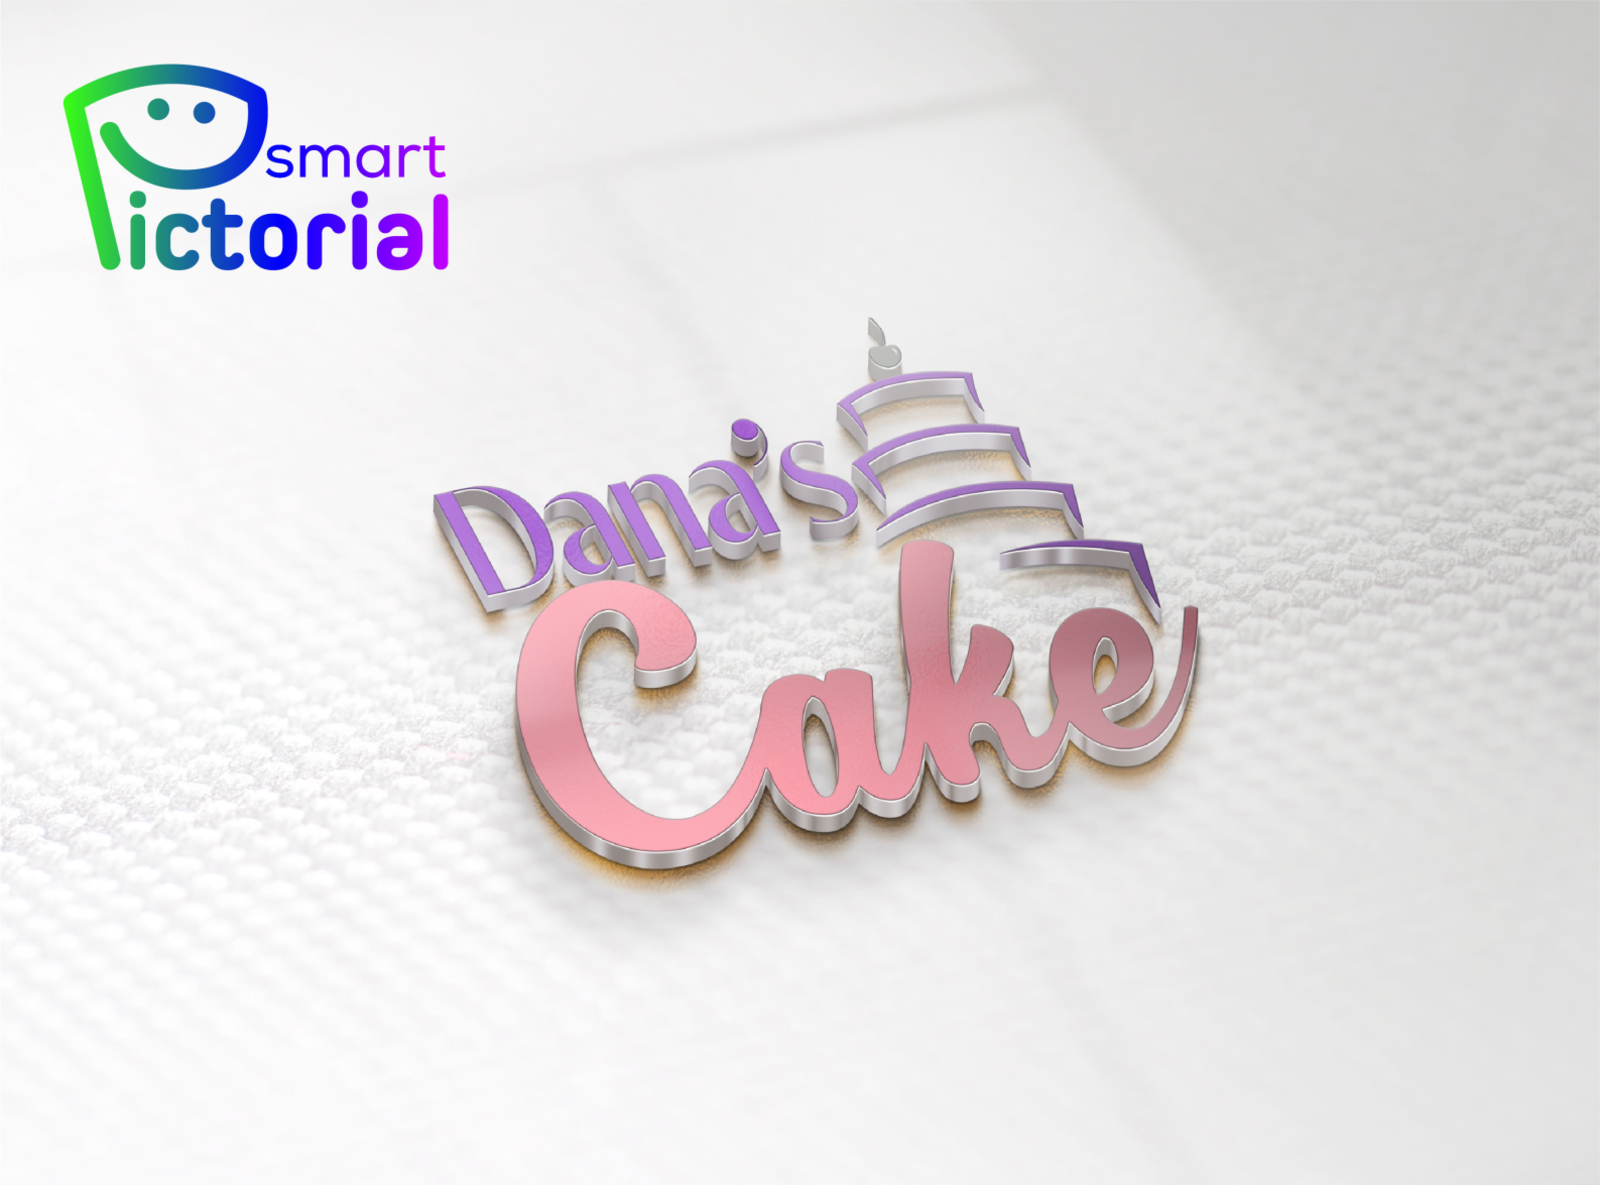 Customize 1,002+ Cake Logo Templates Online - Canva